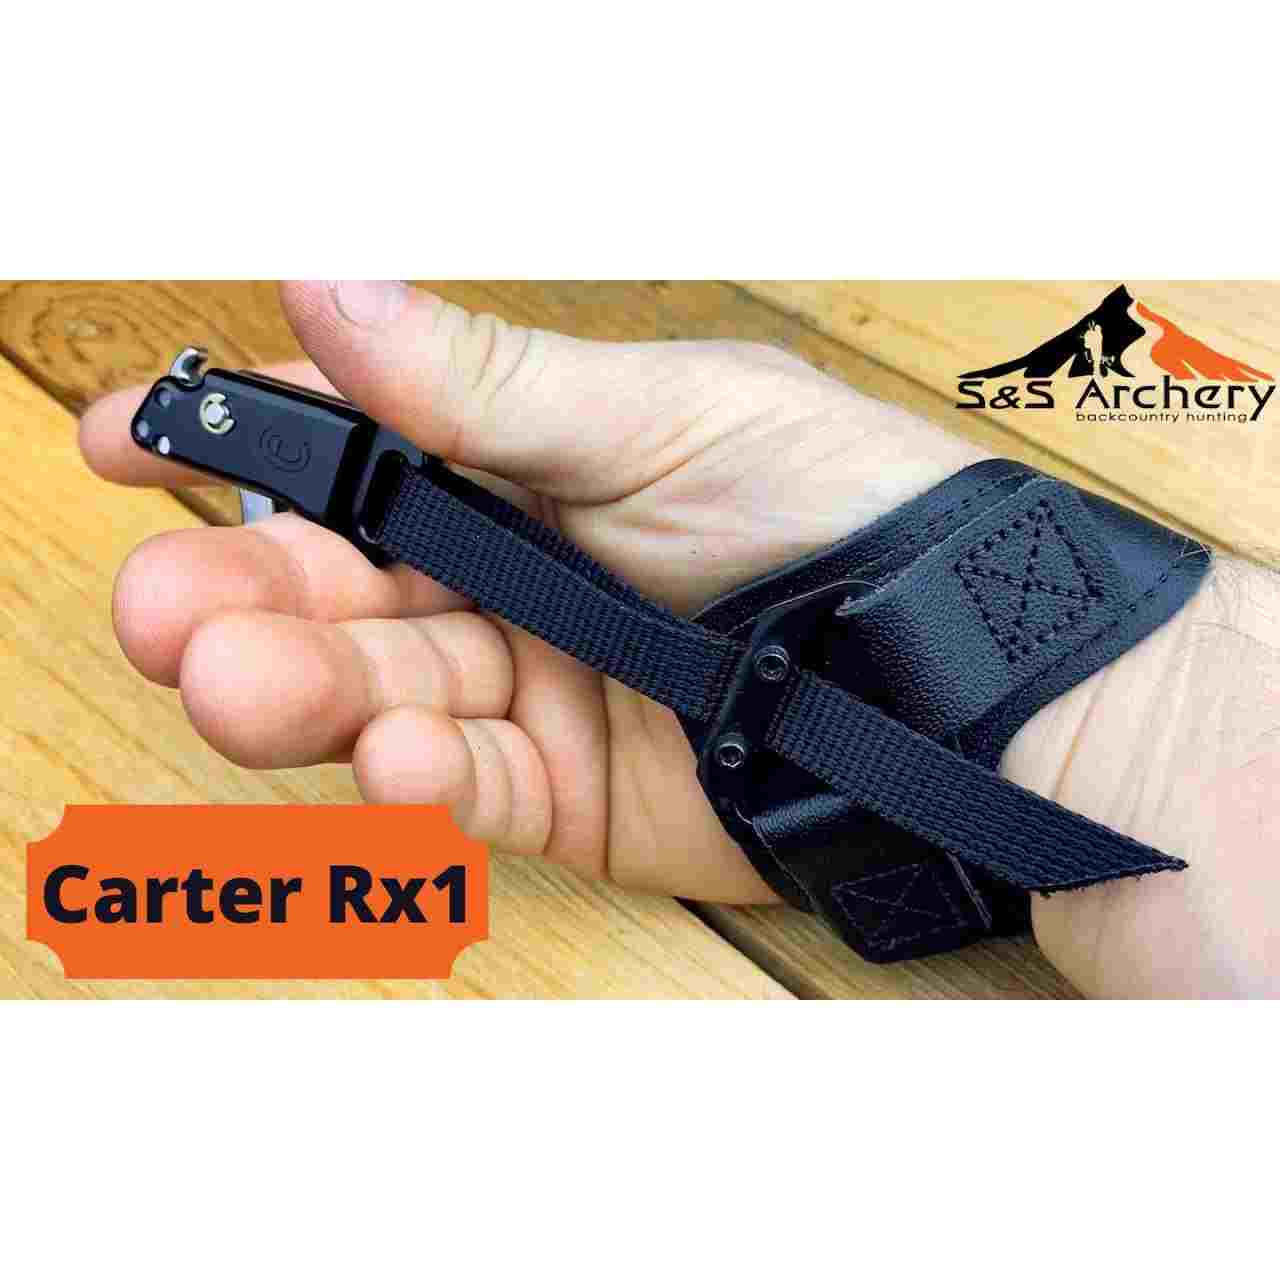 Carter Rx1 Index Release